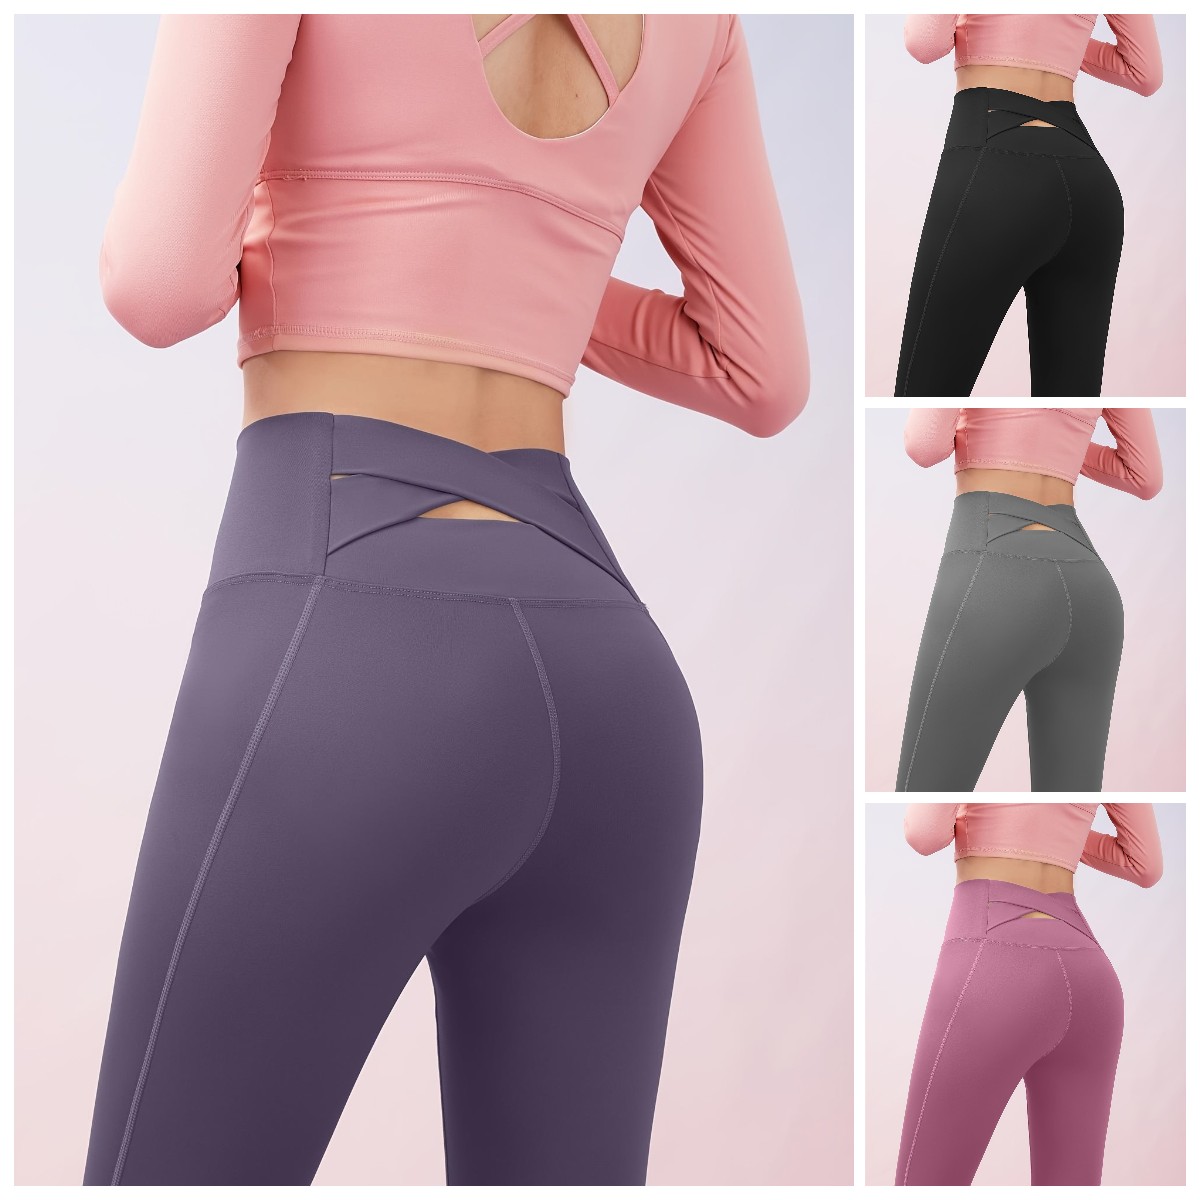 Buy Women's Capri Leggings Yoga Pants Criss Cross Back Tummy Control Butt  Lift High Waist Yoga Fitness Gym Workout Bottoms Spandex Sports Activewear  Stretchy Skinny on ezbuy SG